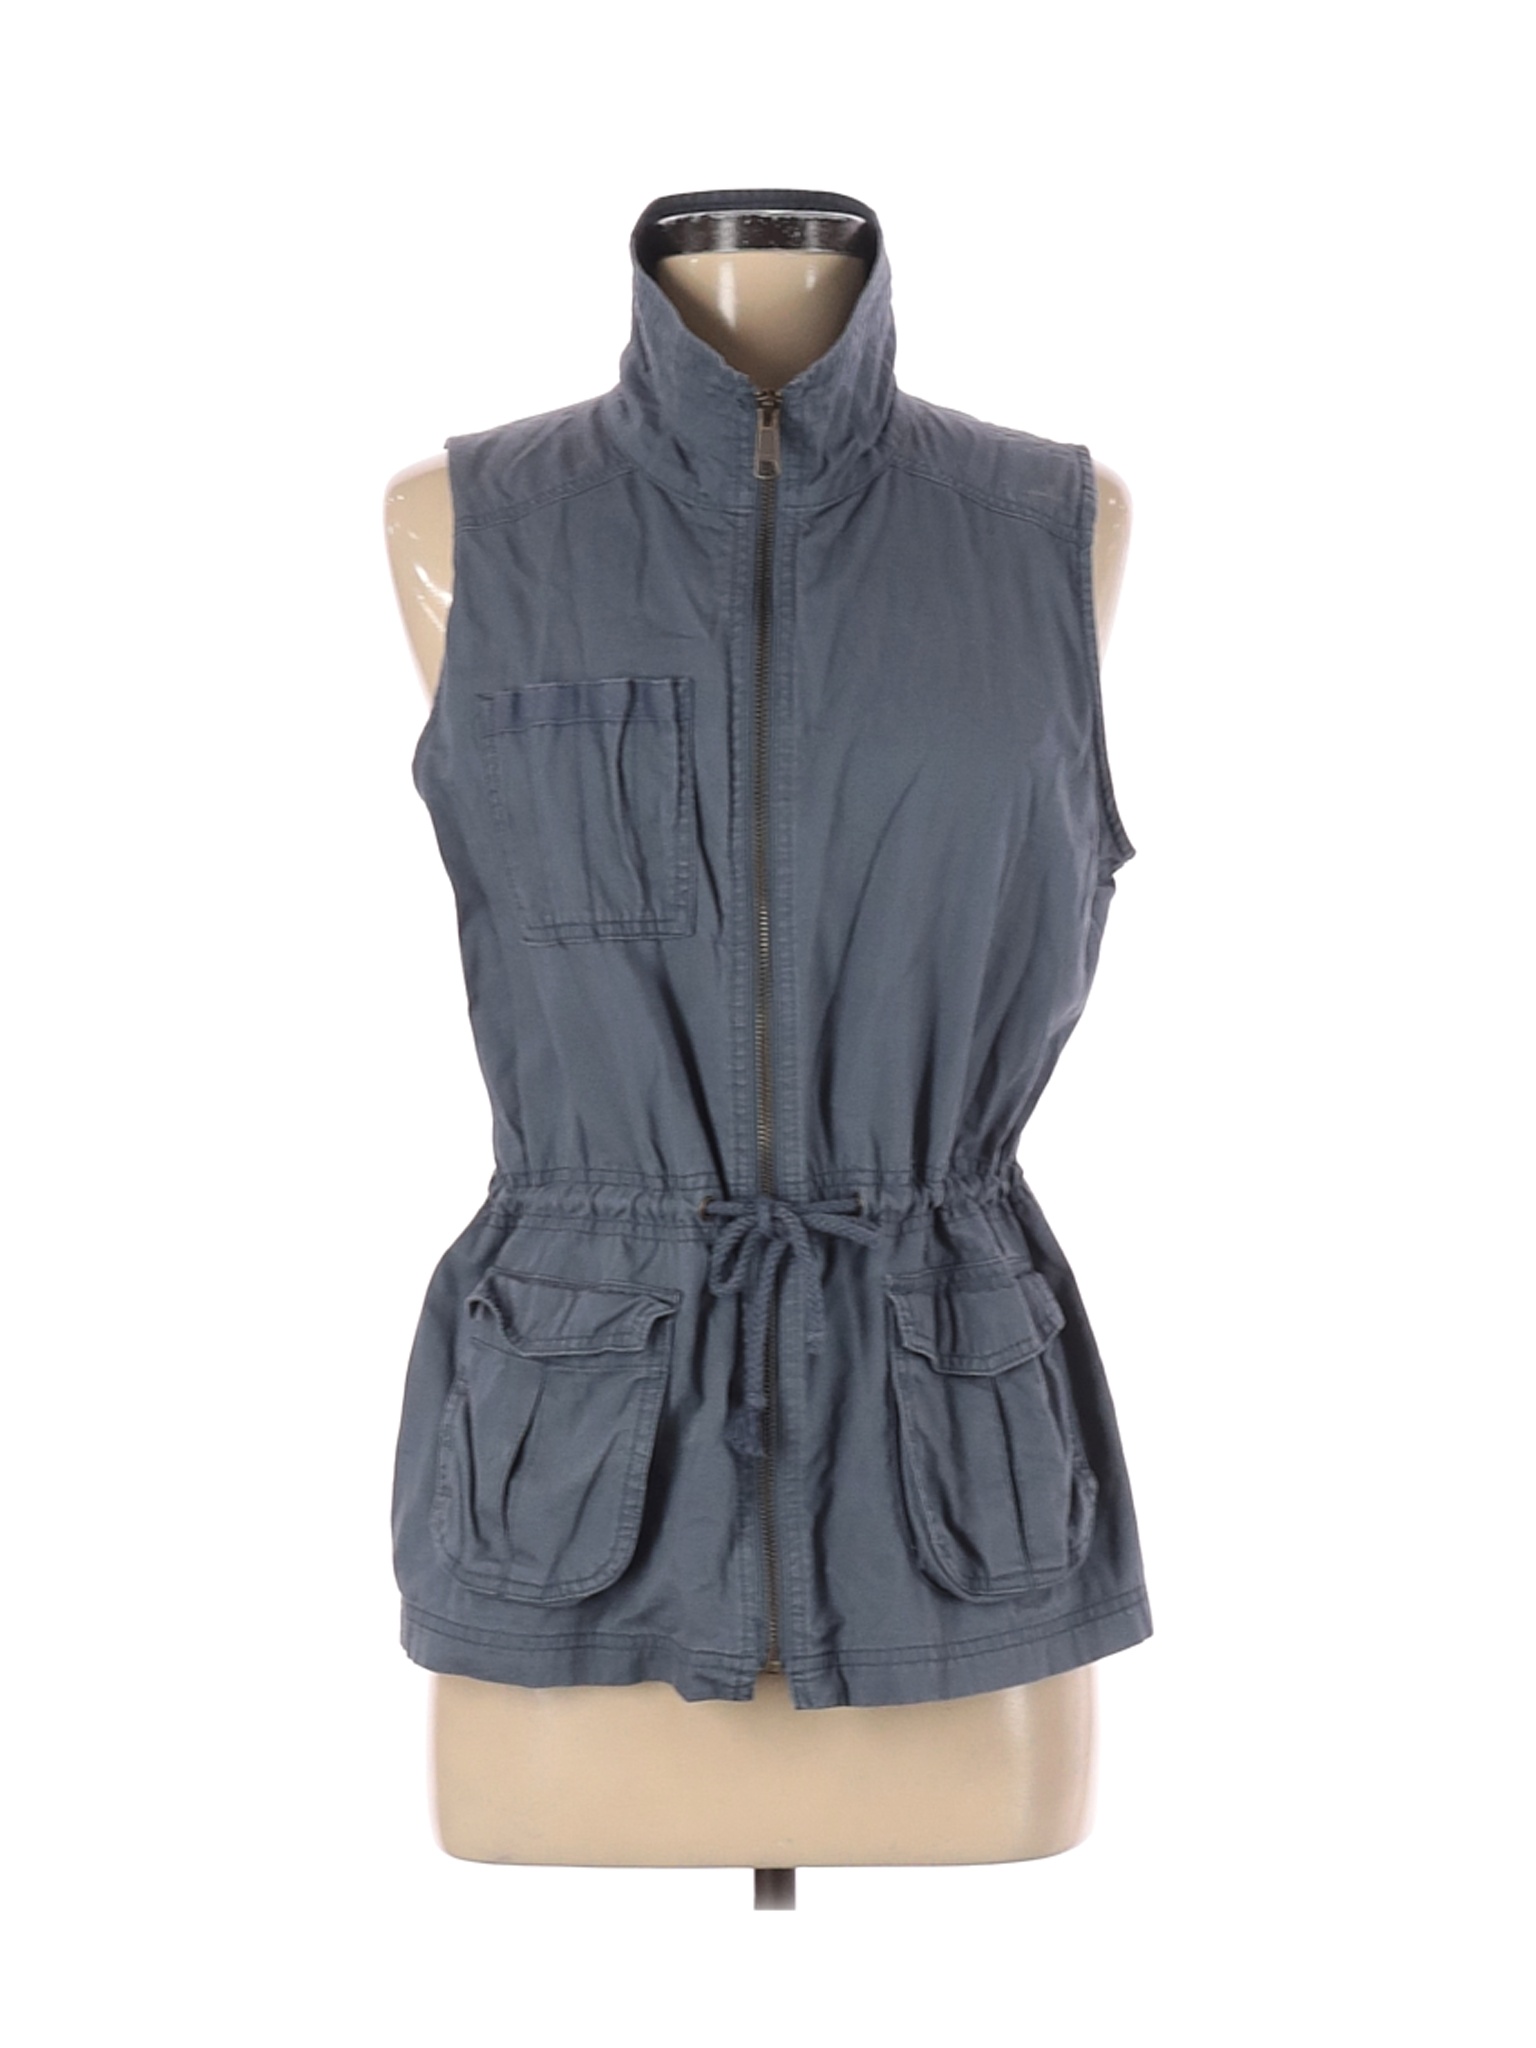 Gap Outlet Women Gray Vest M | eBay